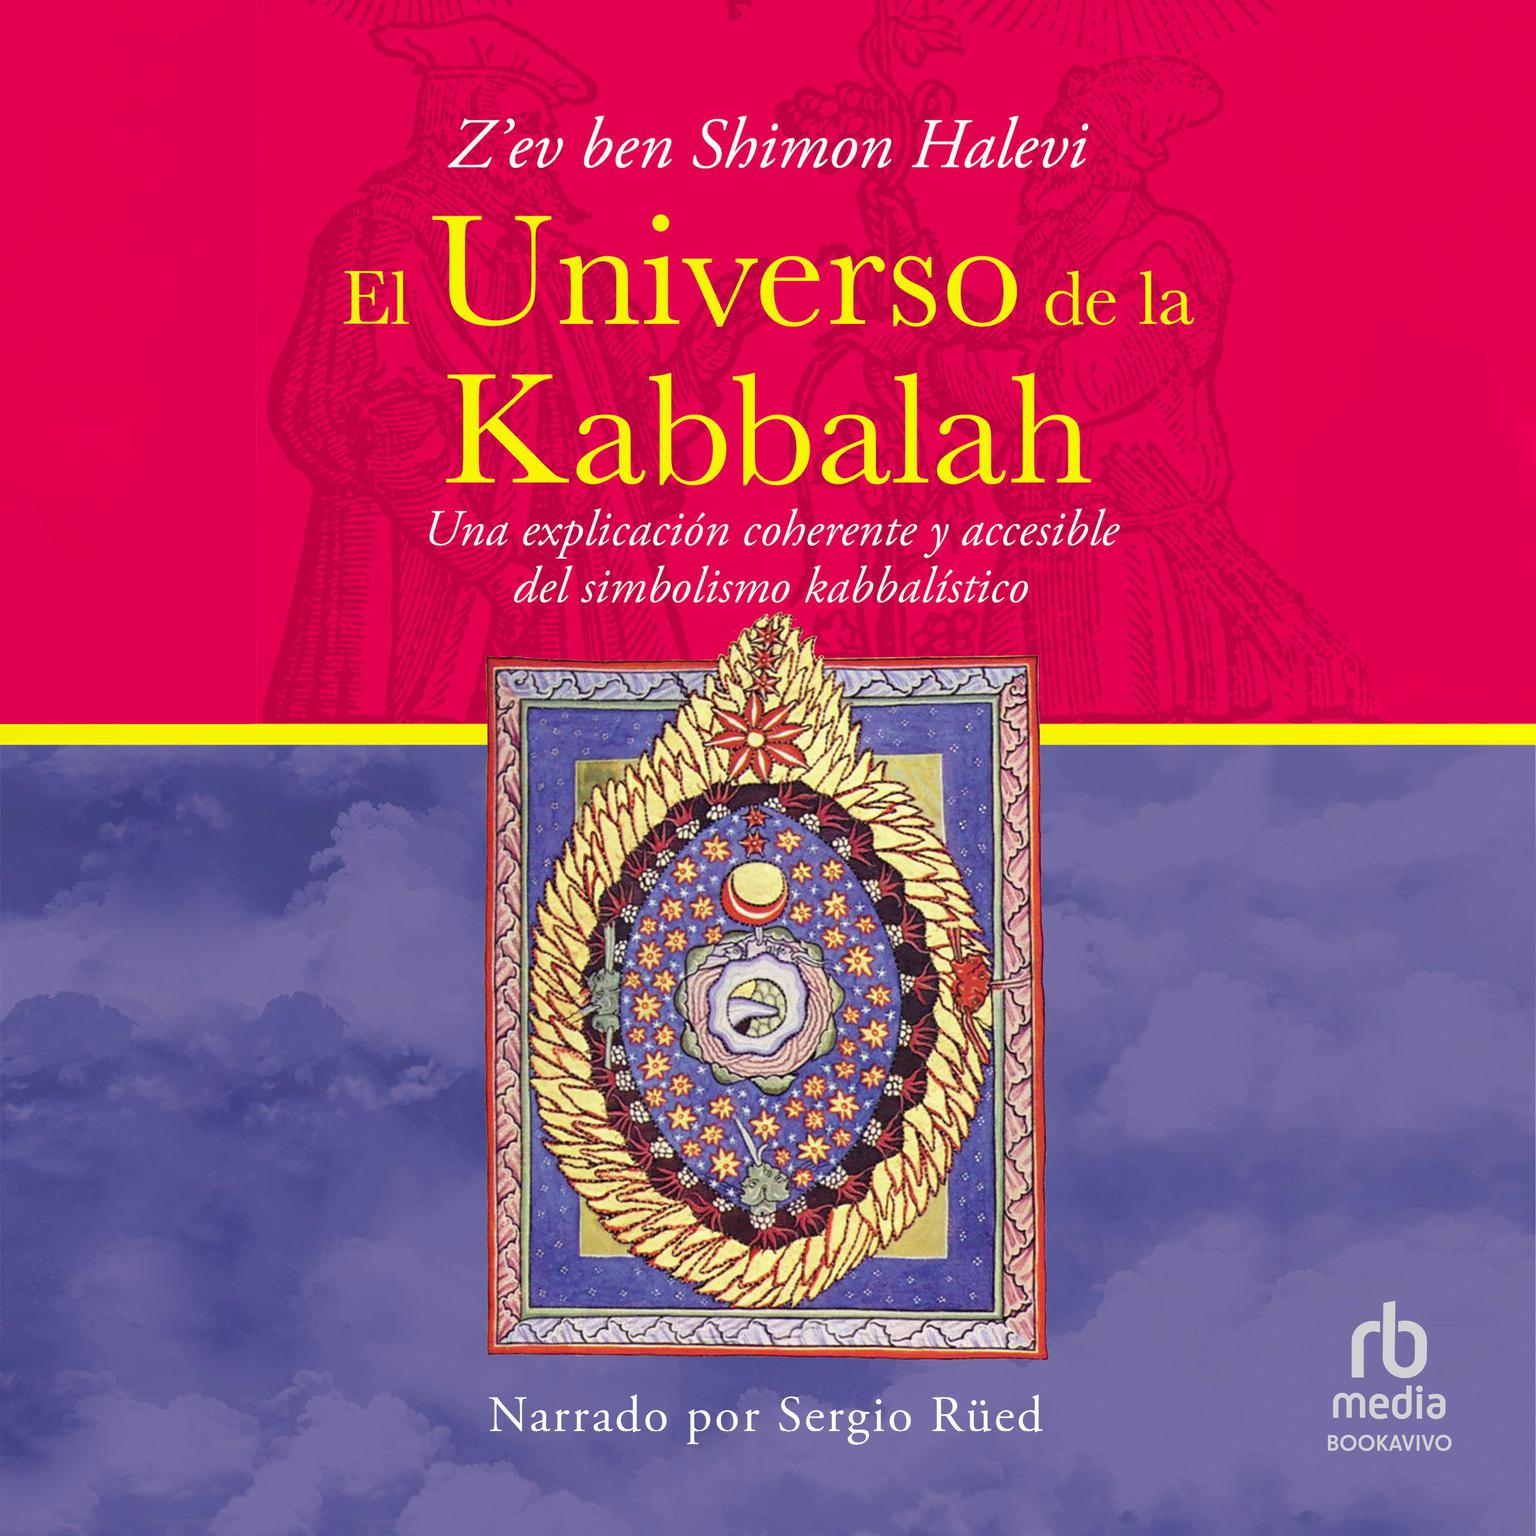 El Universo de la Kabbalah (The Universe of the Kabbalah) Audiobook, by Z'ev Ben Shimon Halevi